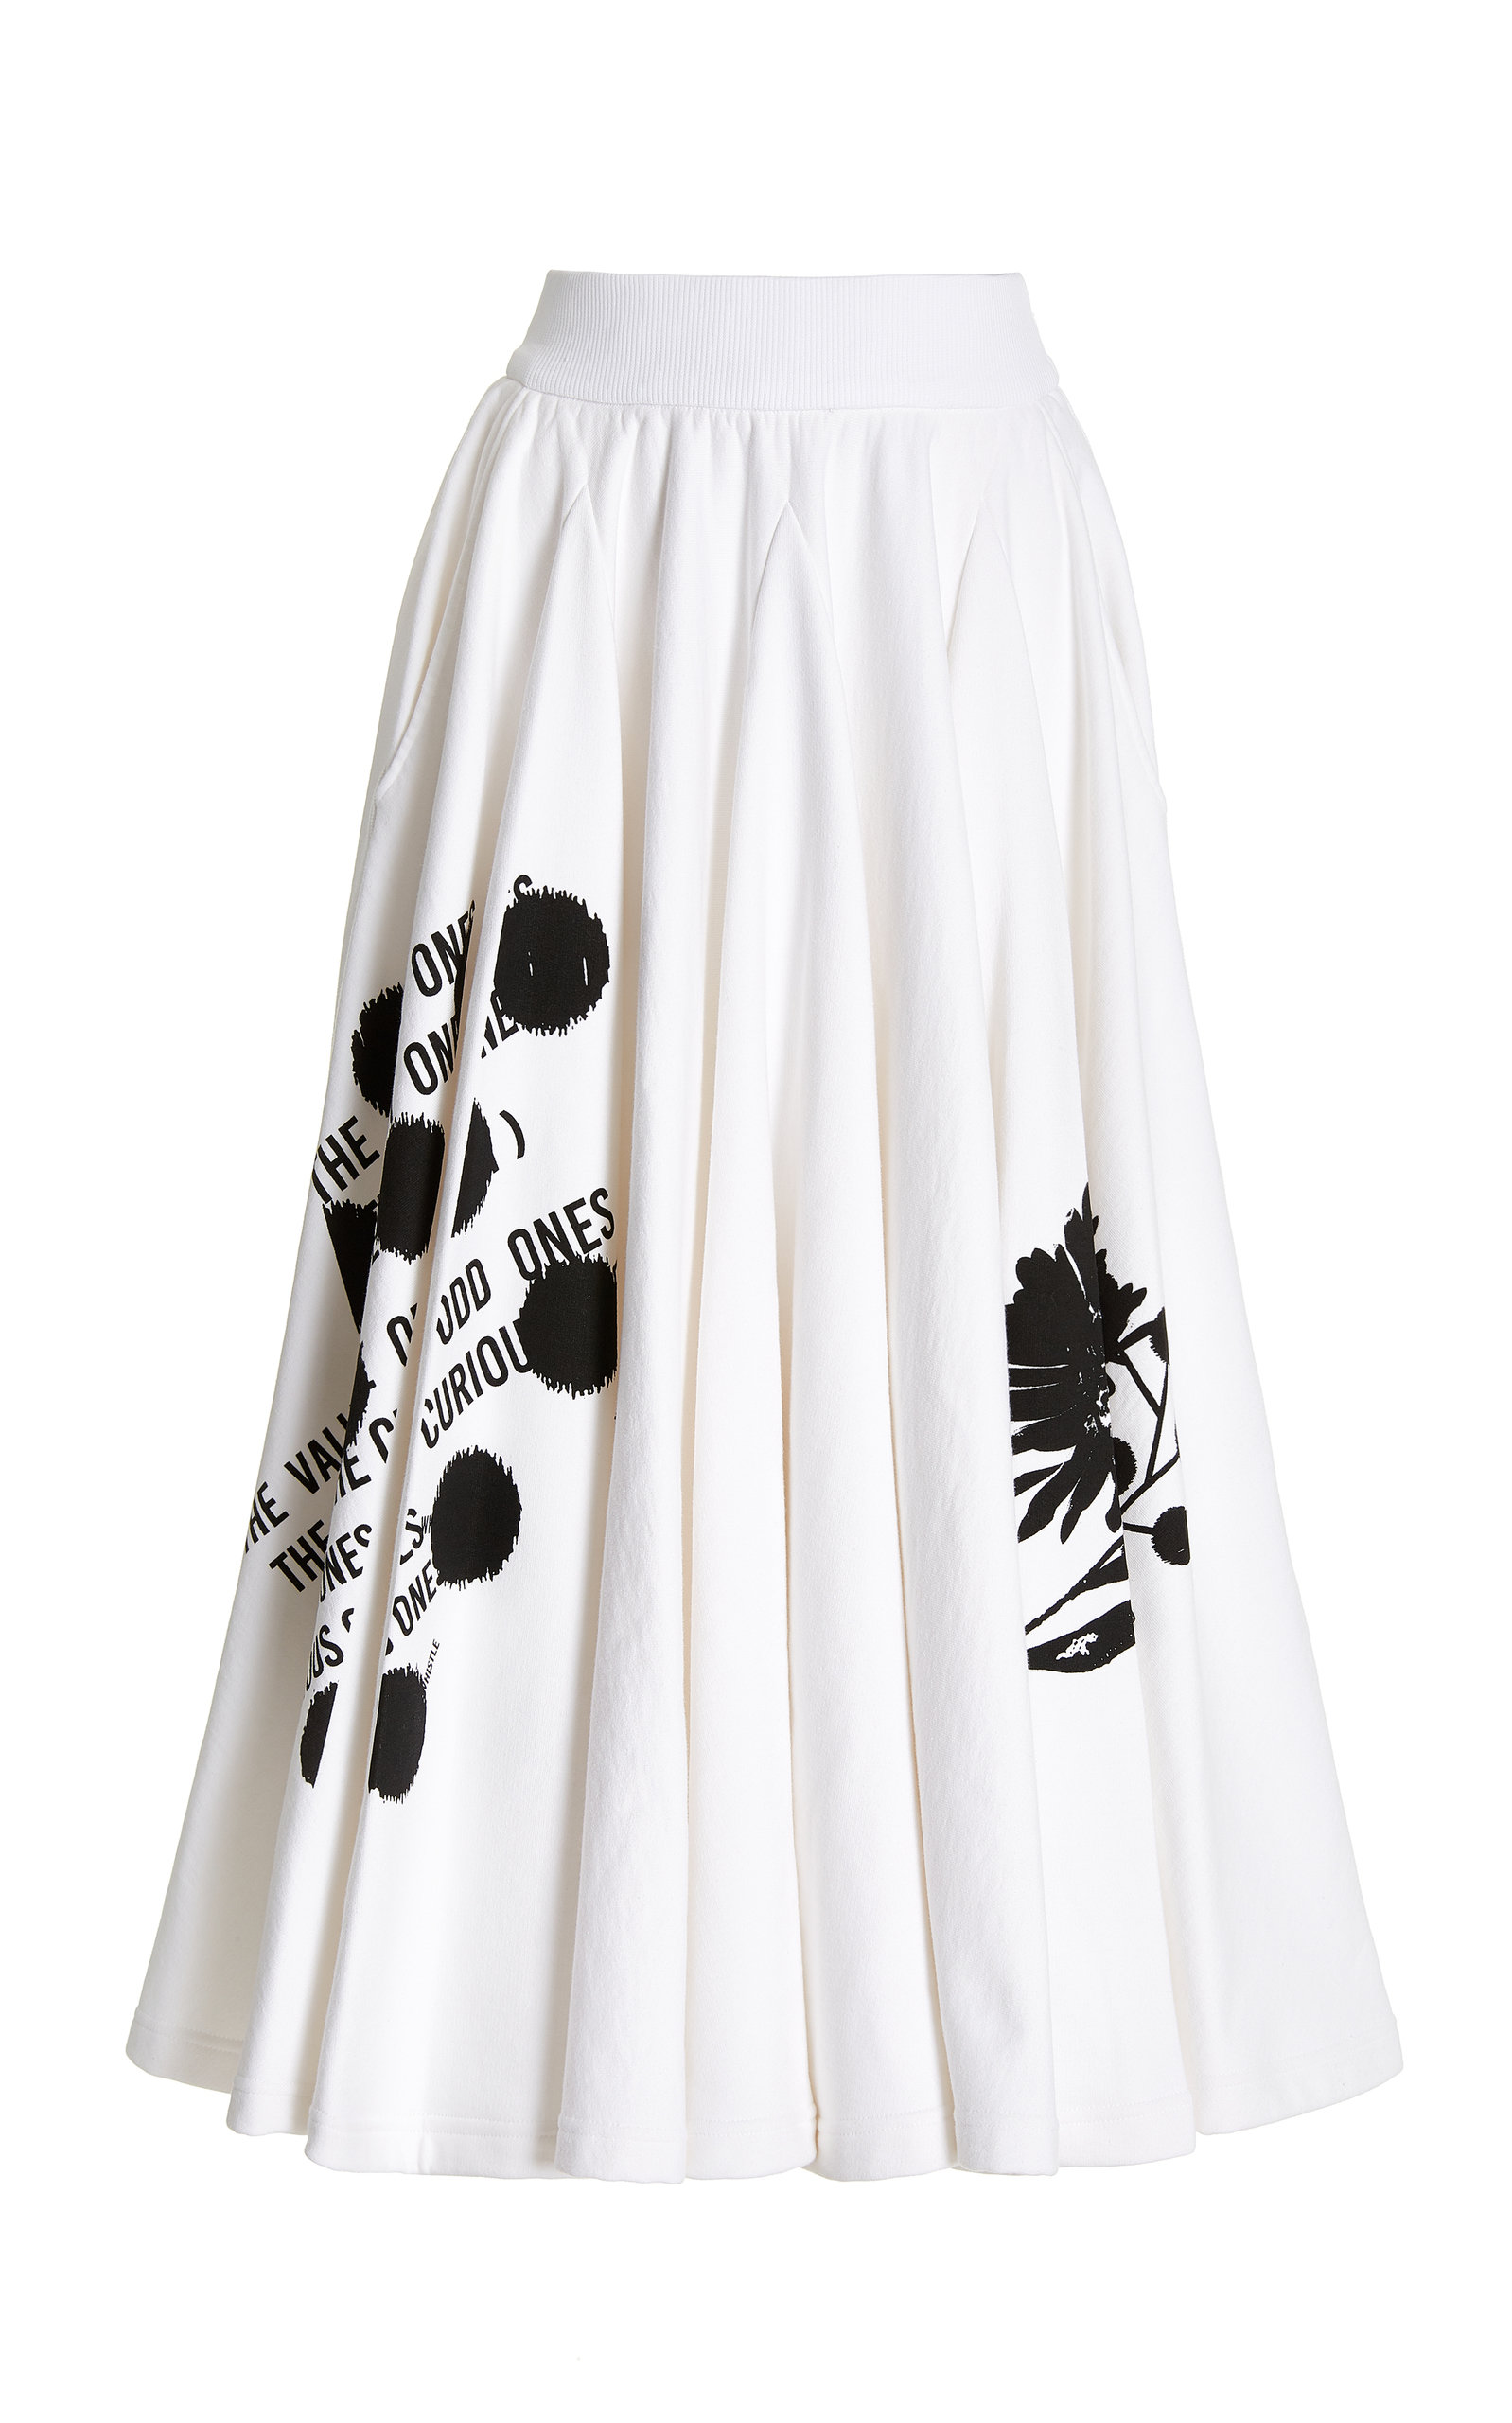 Prada - Printed Pleated Cotton A-Line Midi Skirt - Black/white - M - Moda Operandi